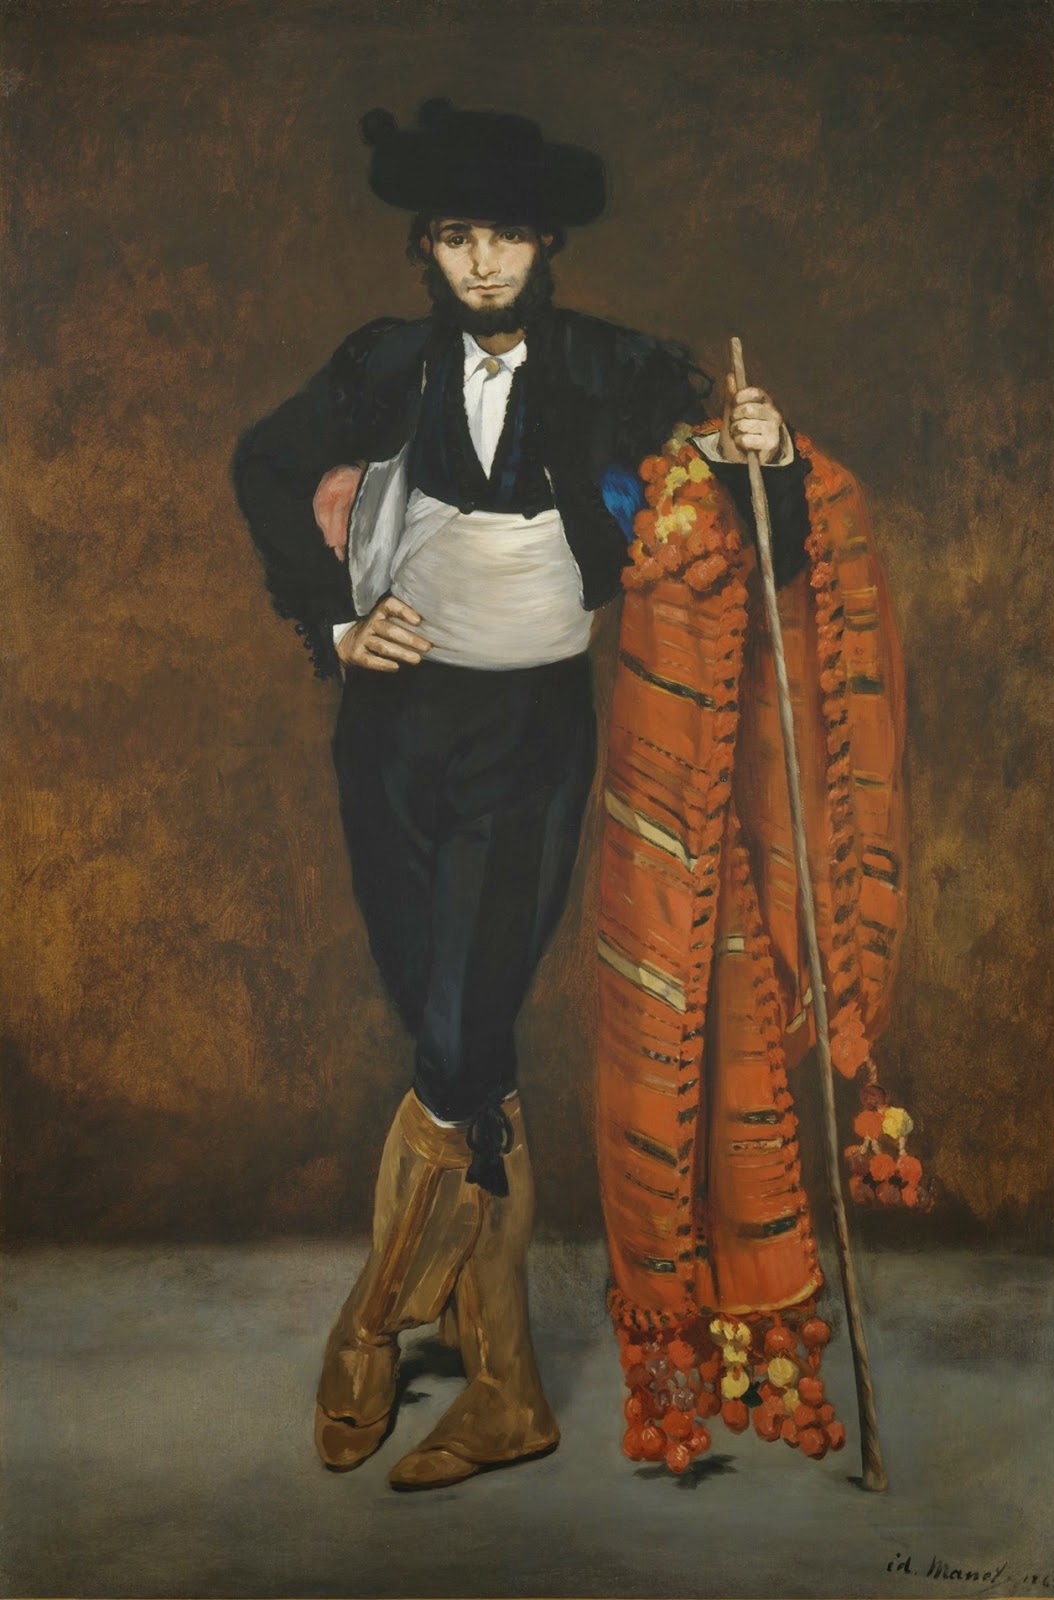 Edouard+Manet-1832-1883 (155).jpg